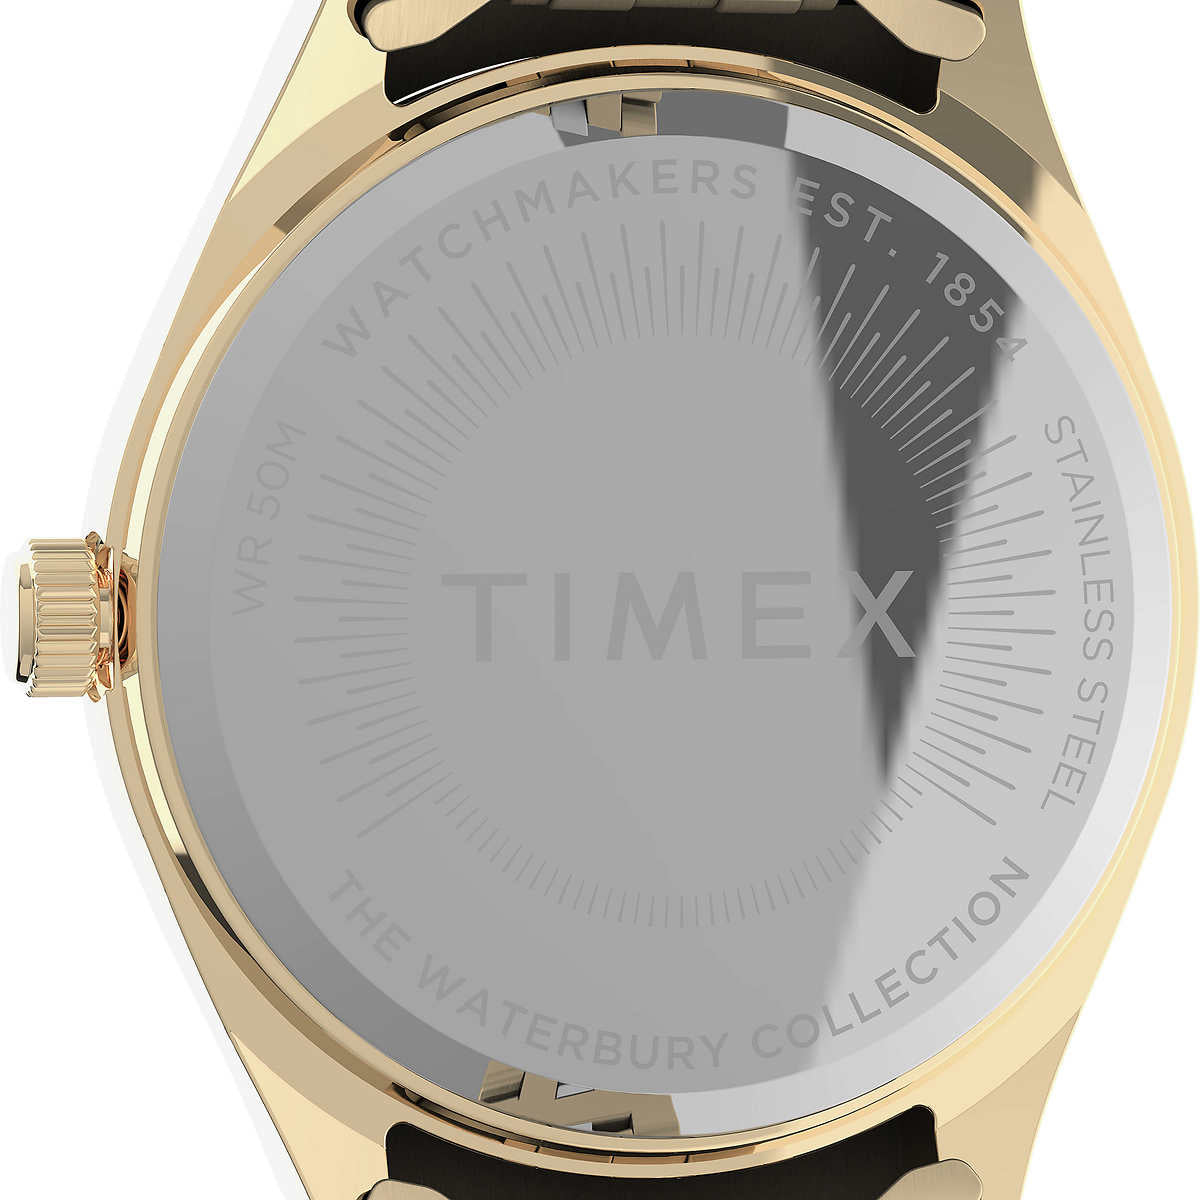 Timex - Waterbury Legacy, Gold-Tone IP Stainless Steel Ladies Quartz Watch - TW2U82900VQ